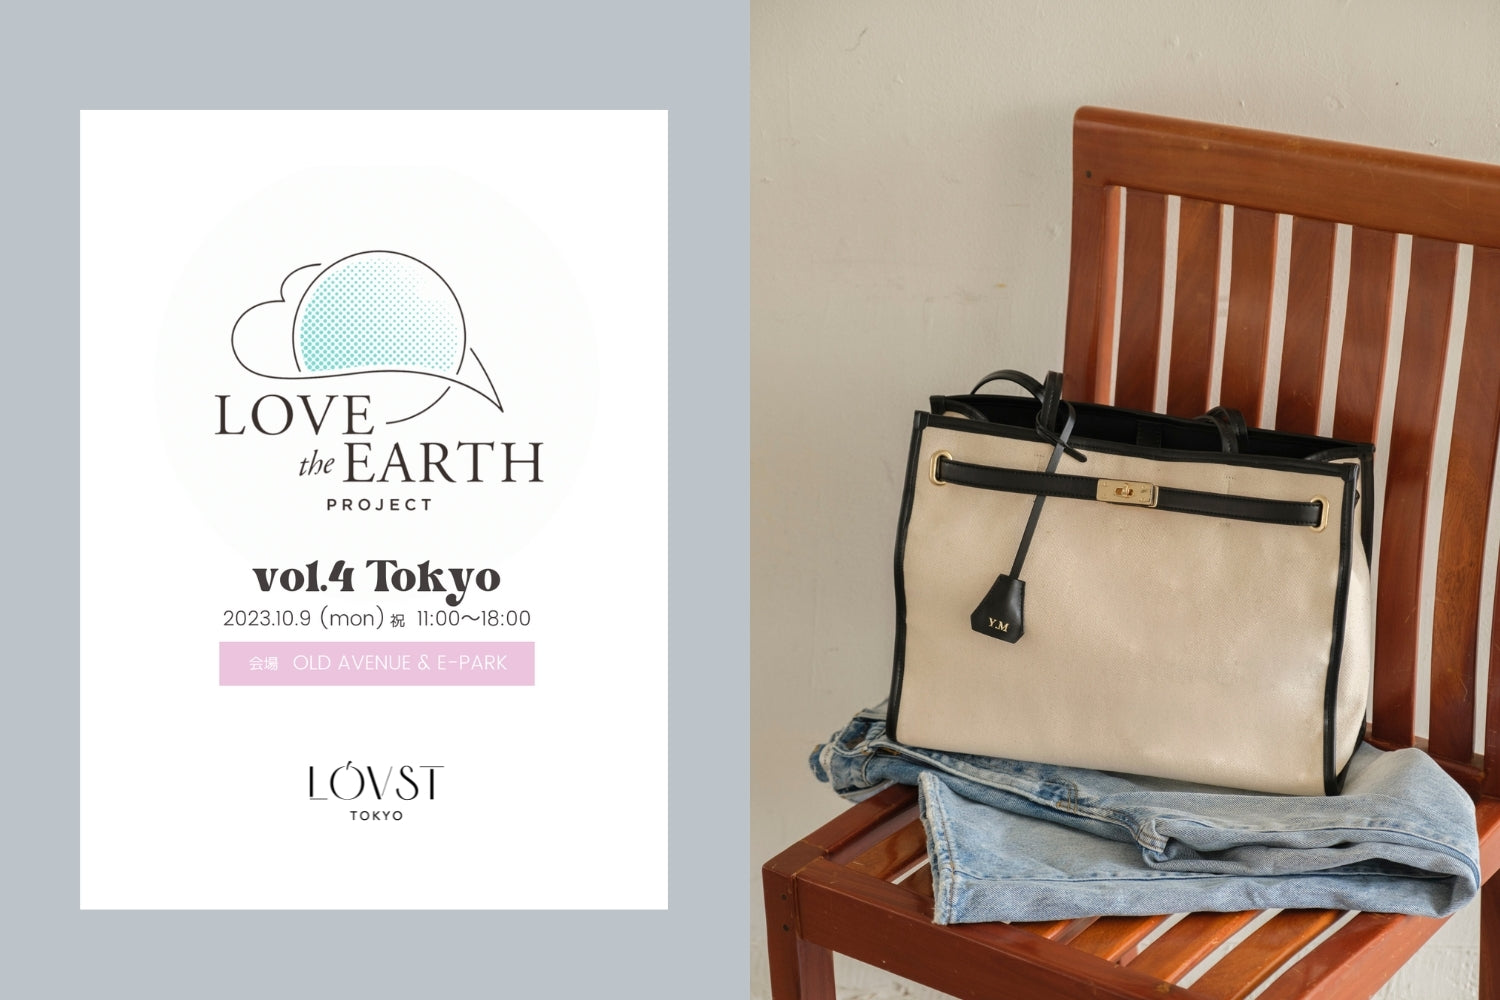 【LOVST TOKYO】「LOVE the EARTH PROJECT -Vol.4-」出店のお知らせ